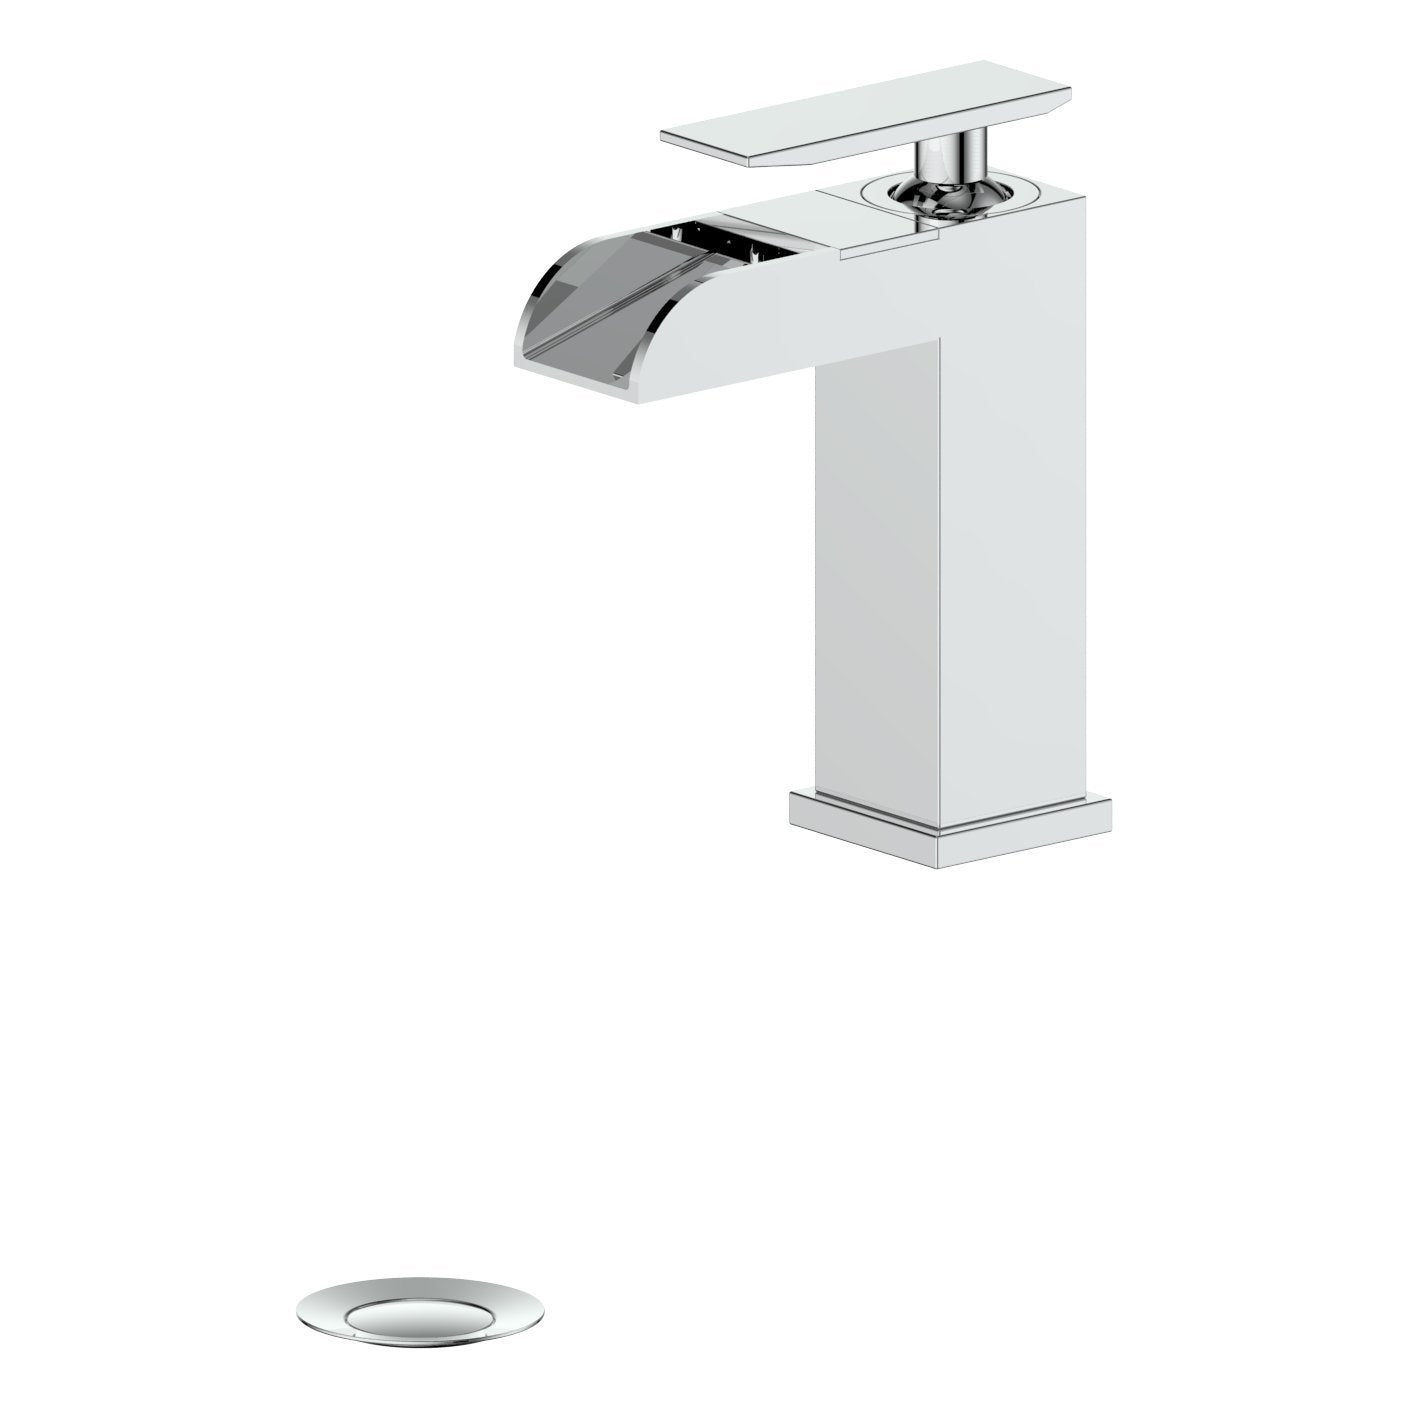 ZLINE Homewood Bath Faucet in Chrome (HMD-BF-CH) - Rustic Kitchen & Bath - Faucets - ZLINE Kitchen and Bath